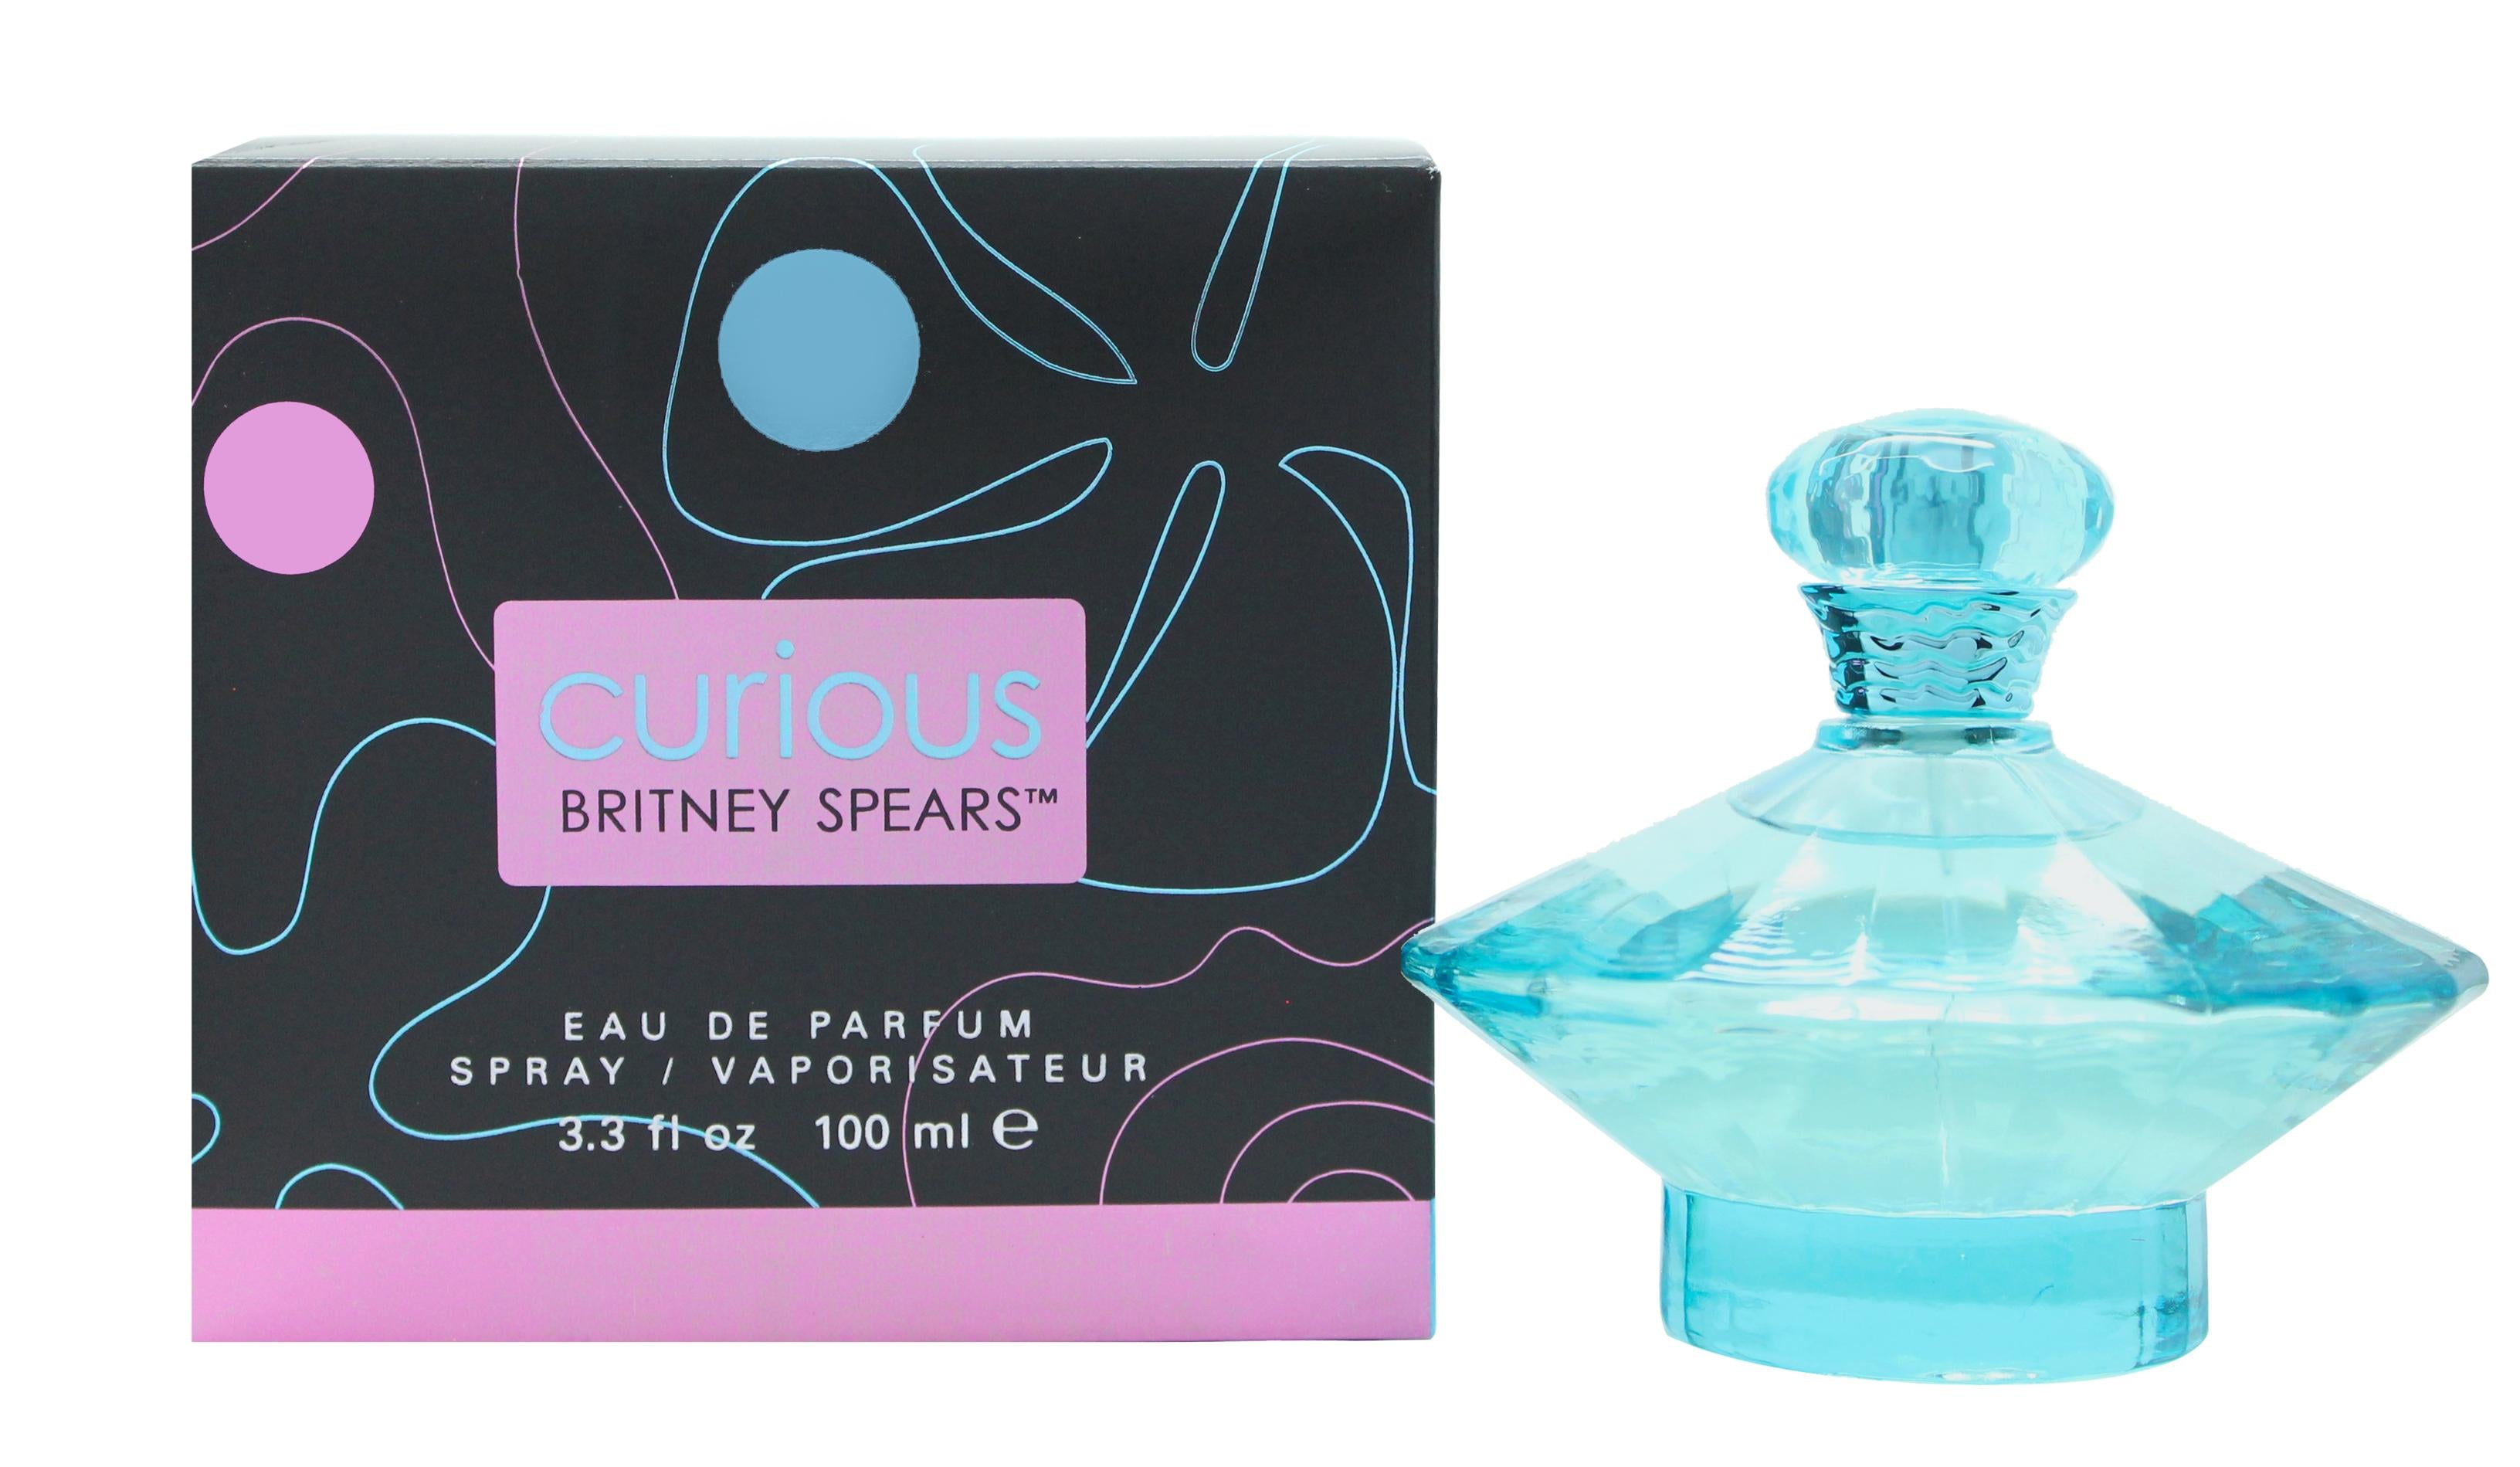 View Britney Spears Curious Eau de Parfum 100ml Spray information